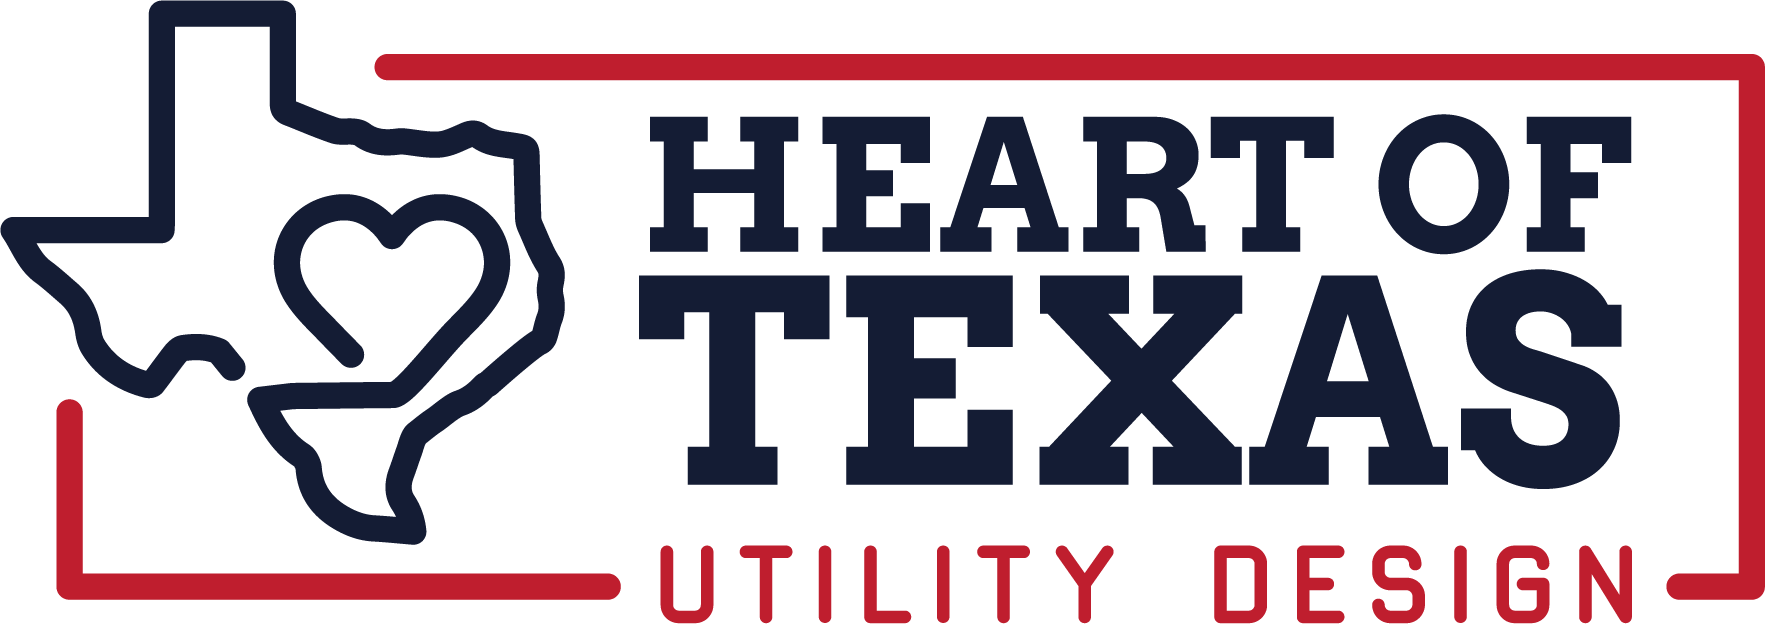 Heart of Texas Logo Final